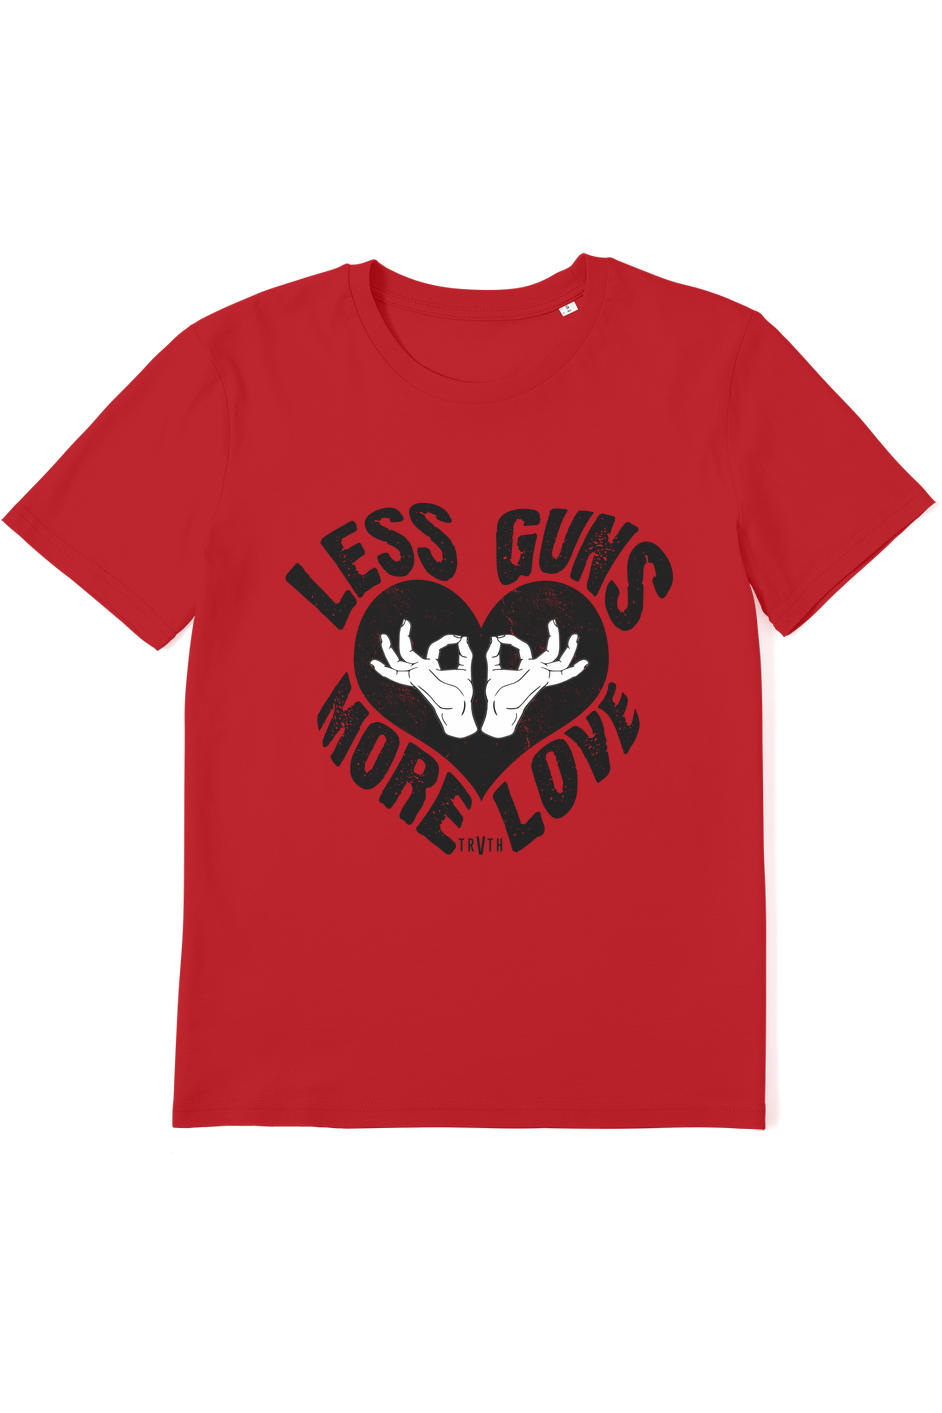 Less Guns More Love Organic T-Shirt vegan, sustainable, organic streetwear, - TRVTH ORGANIC CLOTHING